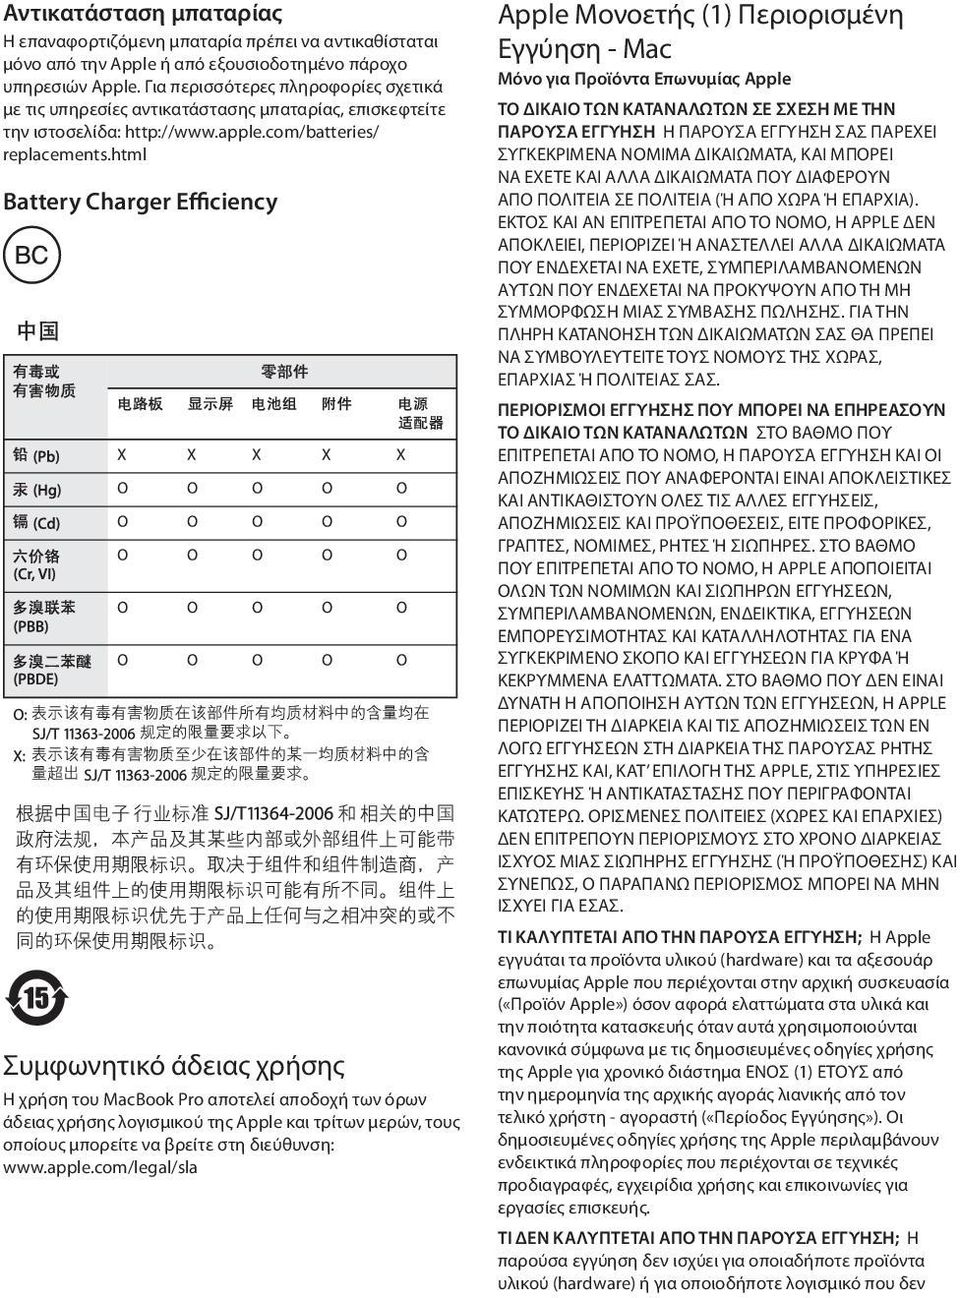 html Battery Charger Efficiency 020-5563-A Συμφωνητικό άδειας χρήσης EFUP15china Η χρήση του MacBook Pro αποτελεί αποδοχή των όρων άδειας χρήσης λογισμικού της Apple και τρίτων μερών, τους οποίους